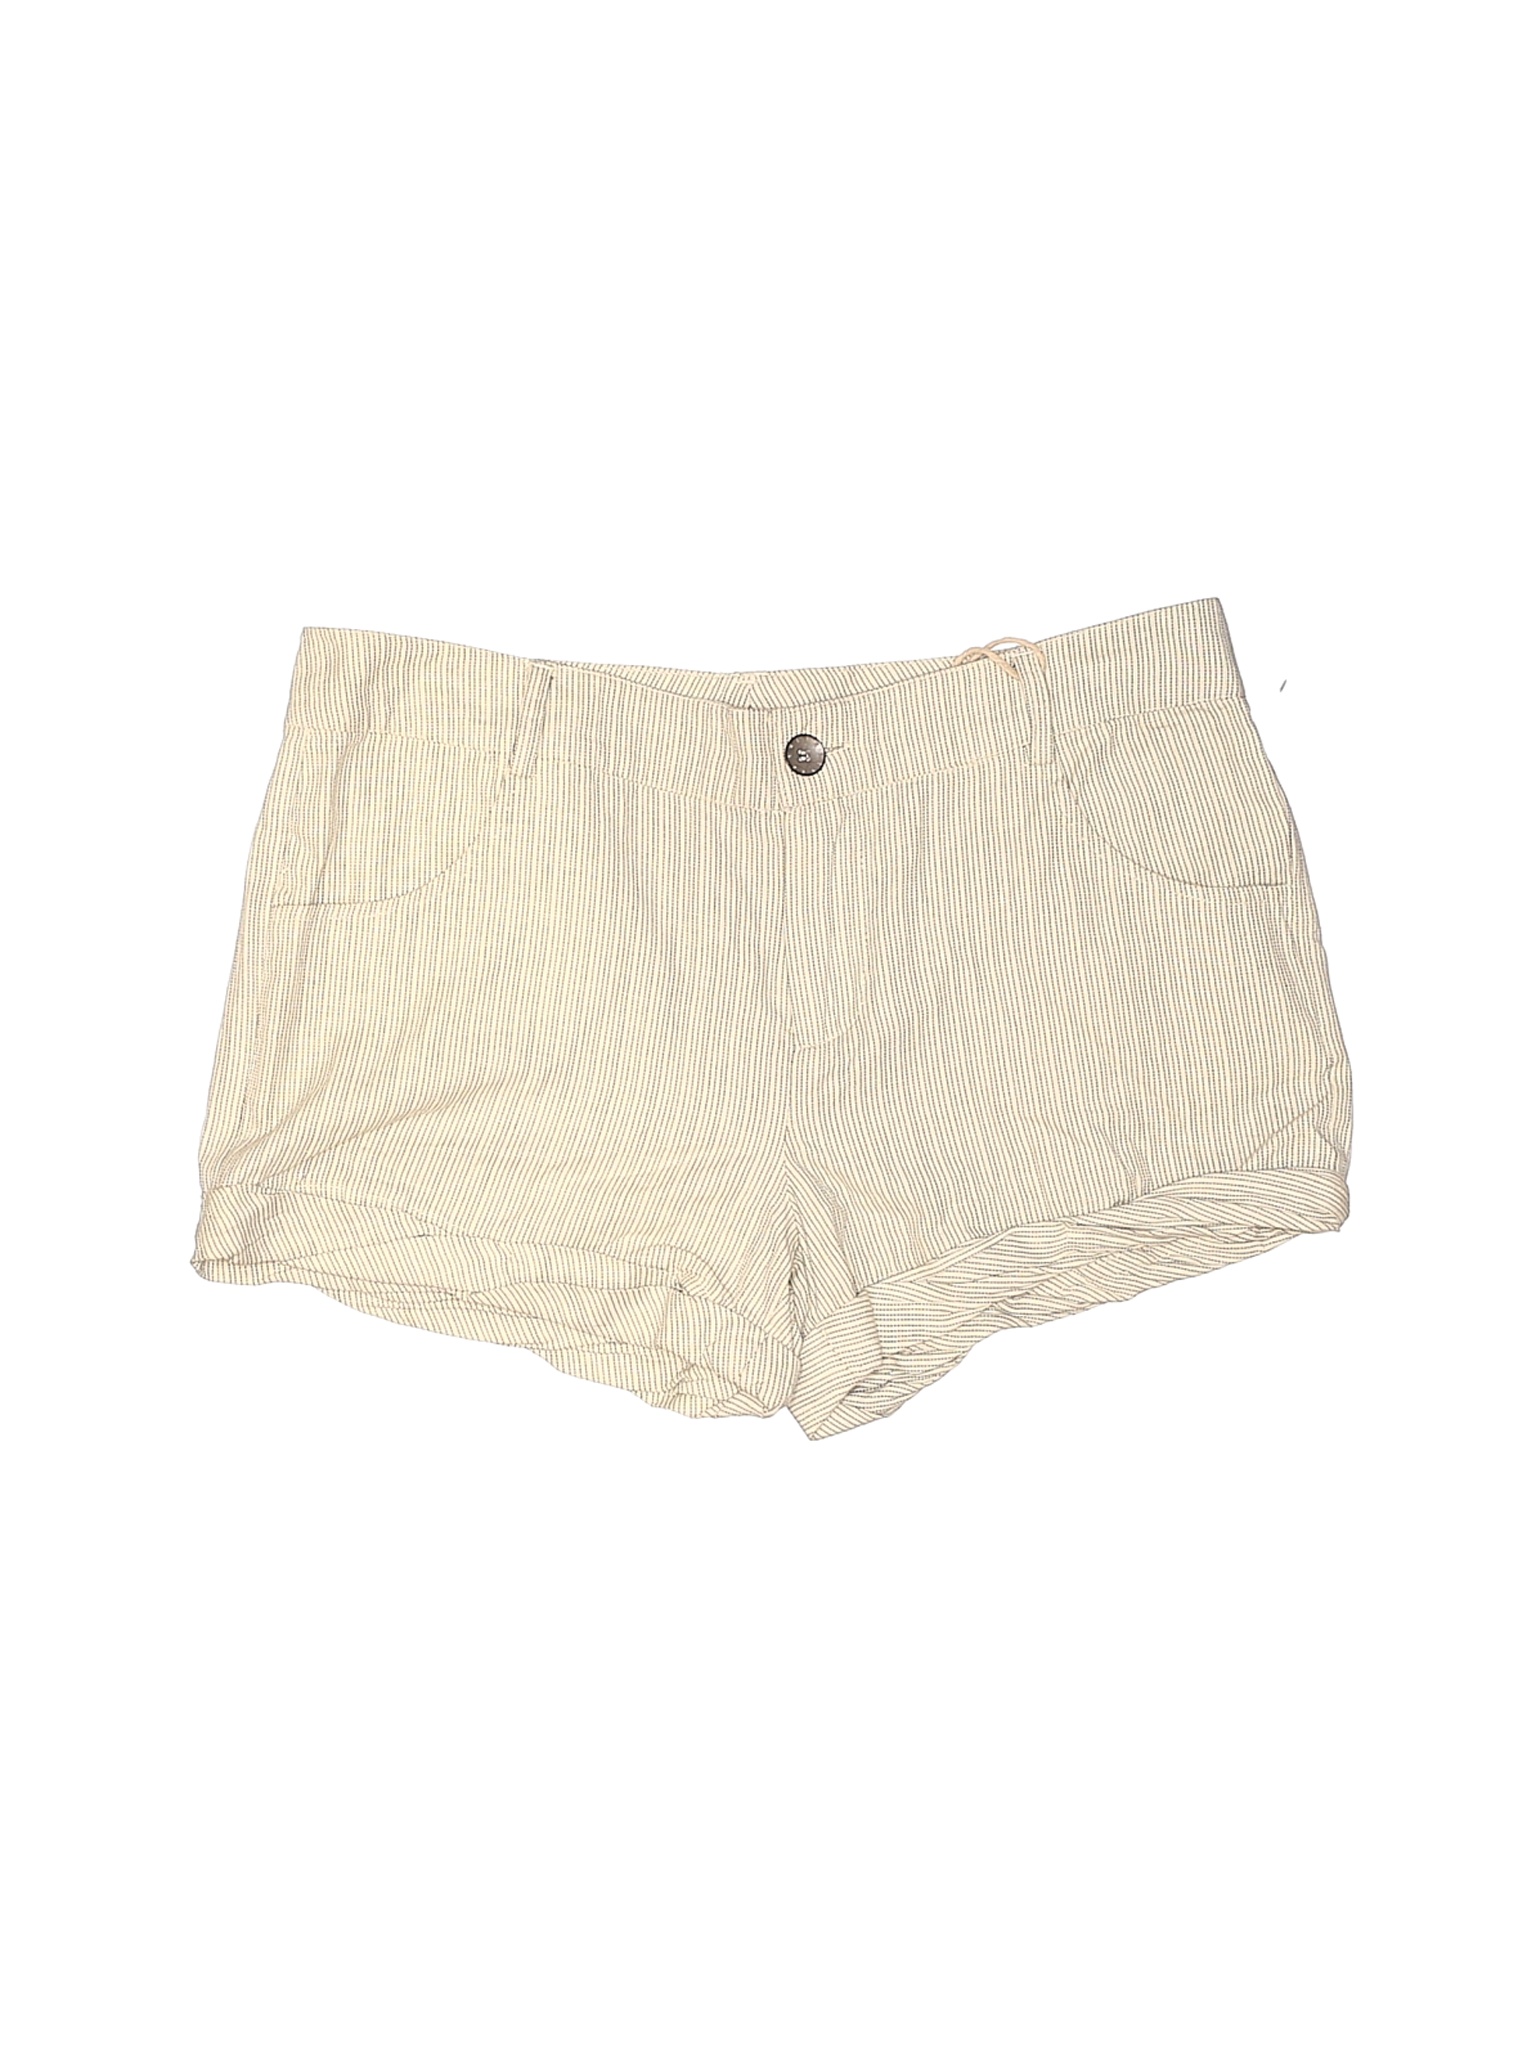 NWT Quiksilver Women Ivory Denim Shorts 7 | eBay